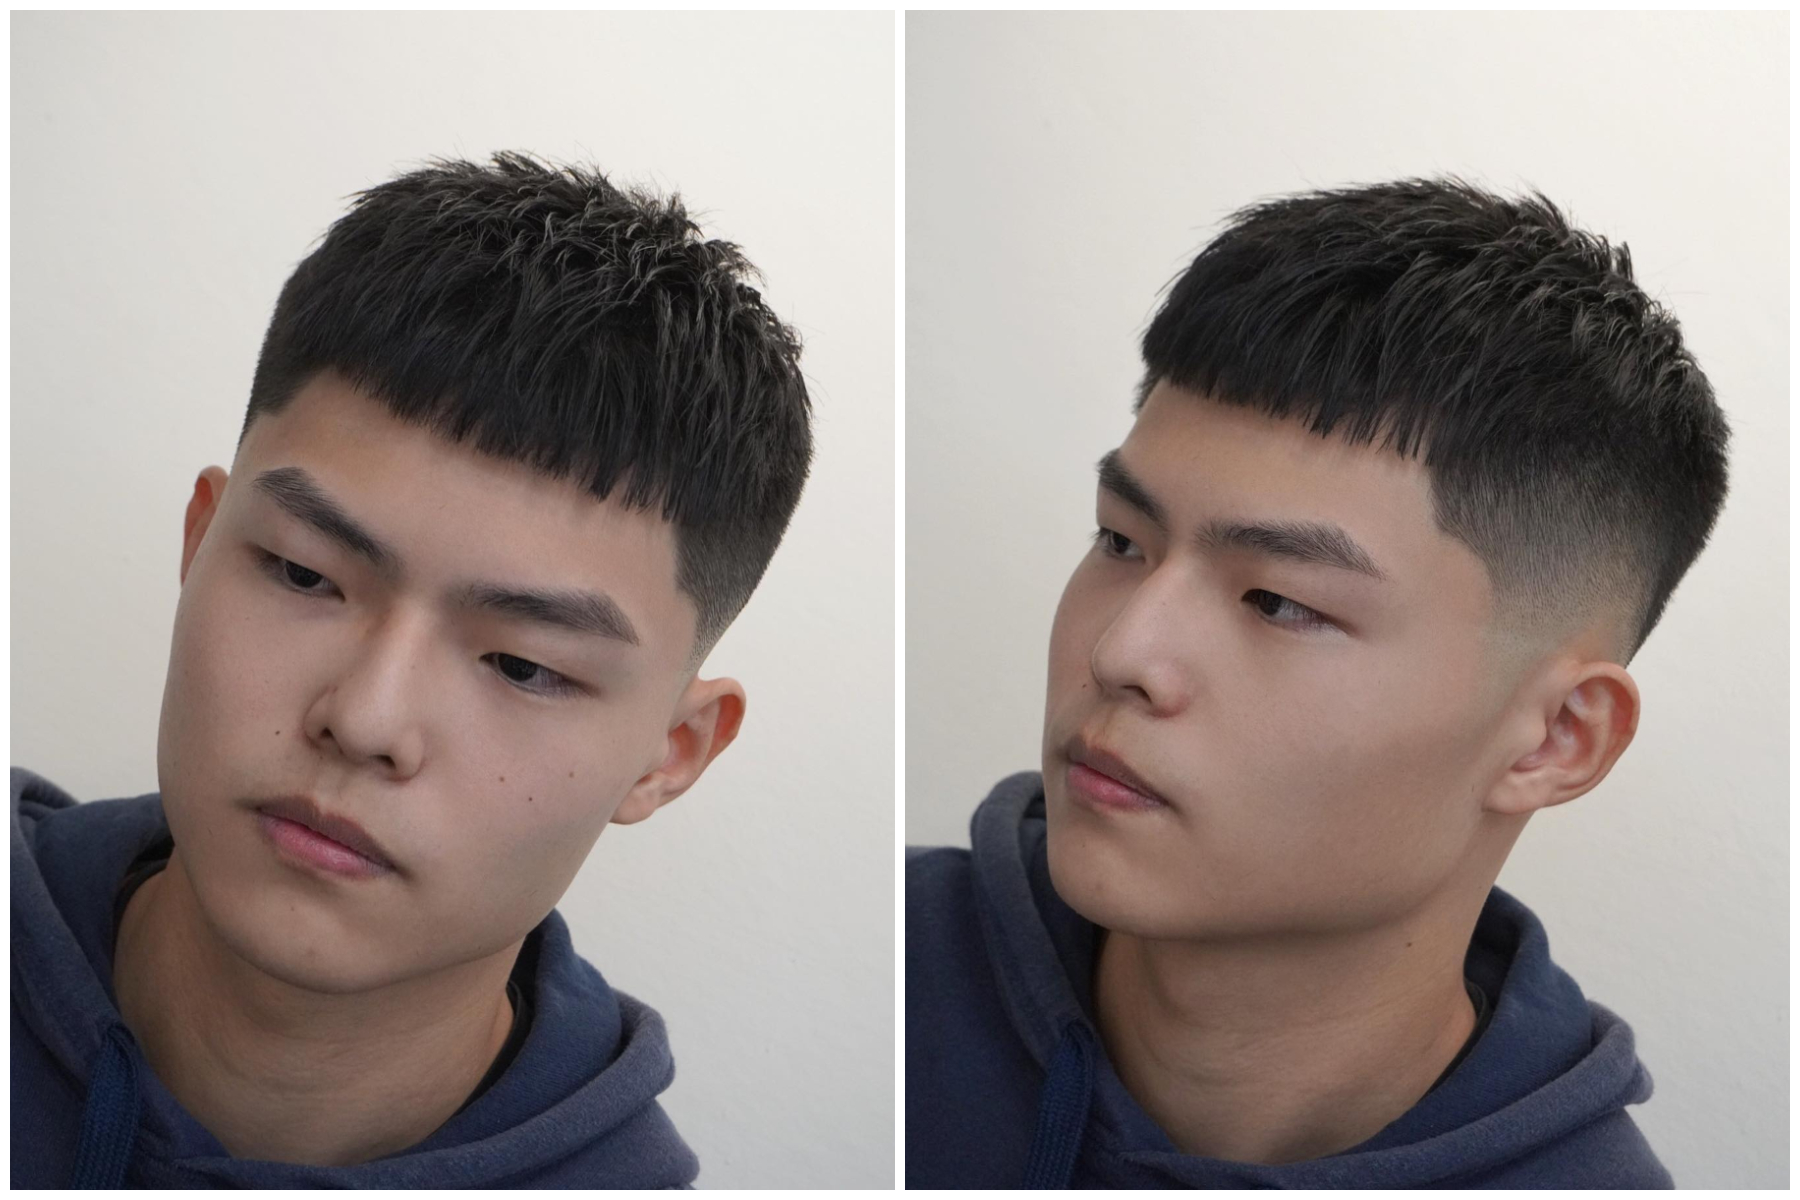 North Korean men aren't allowed to get Kim Jong Un's haircut